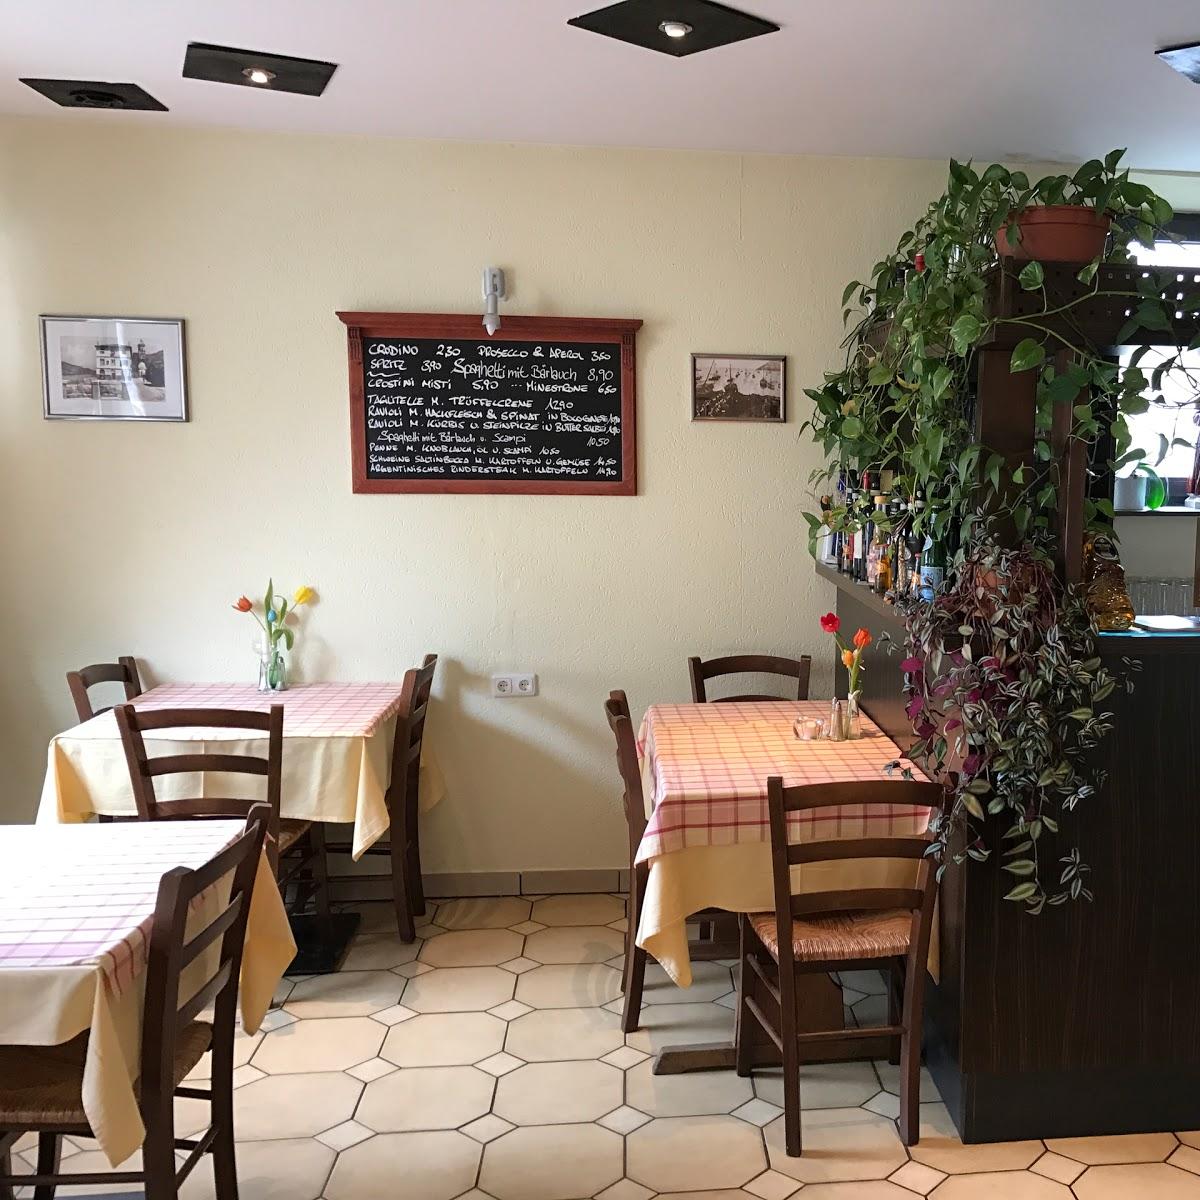 Restaurant "Pizzeria Toscana" in  Dinkelscherben